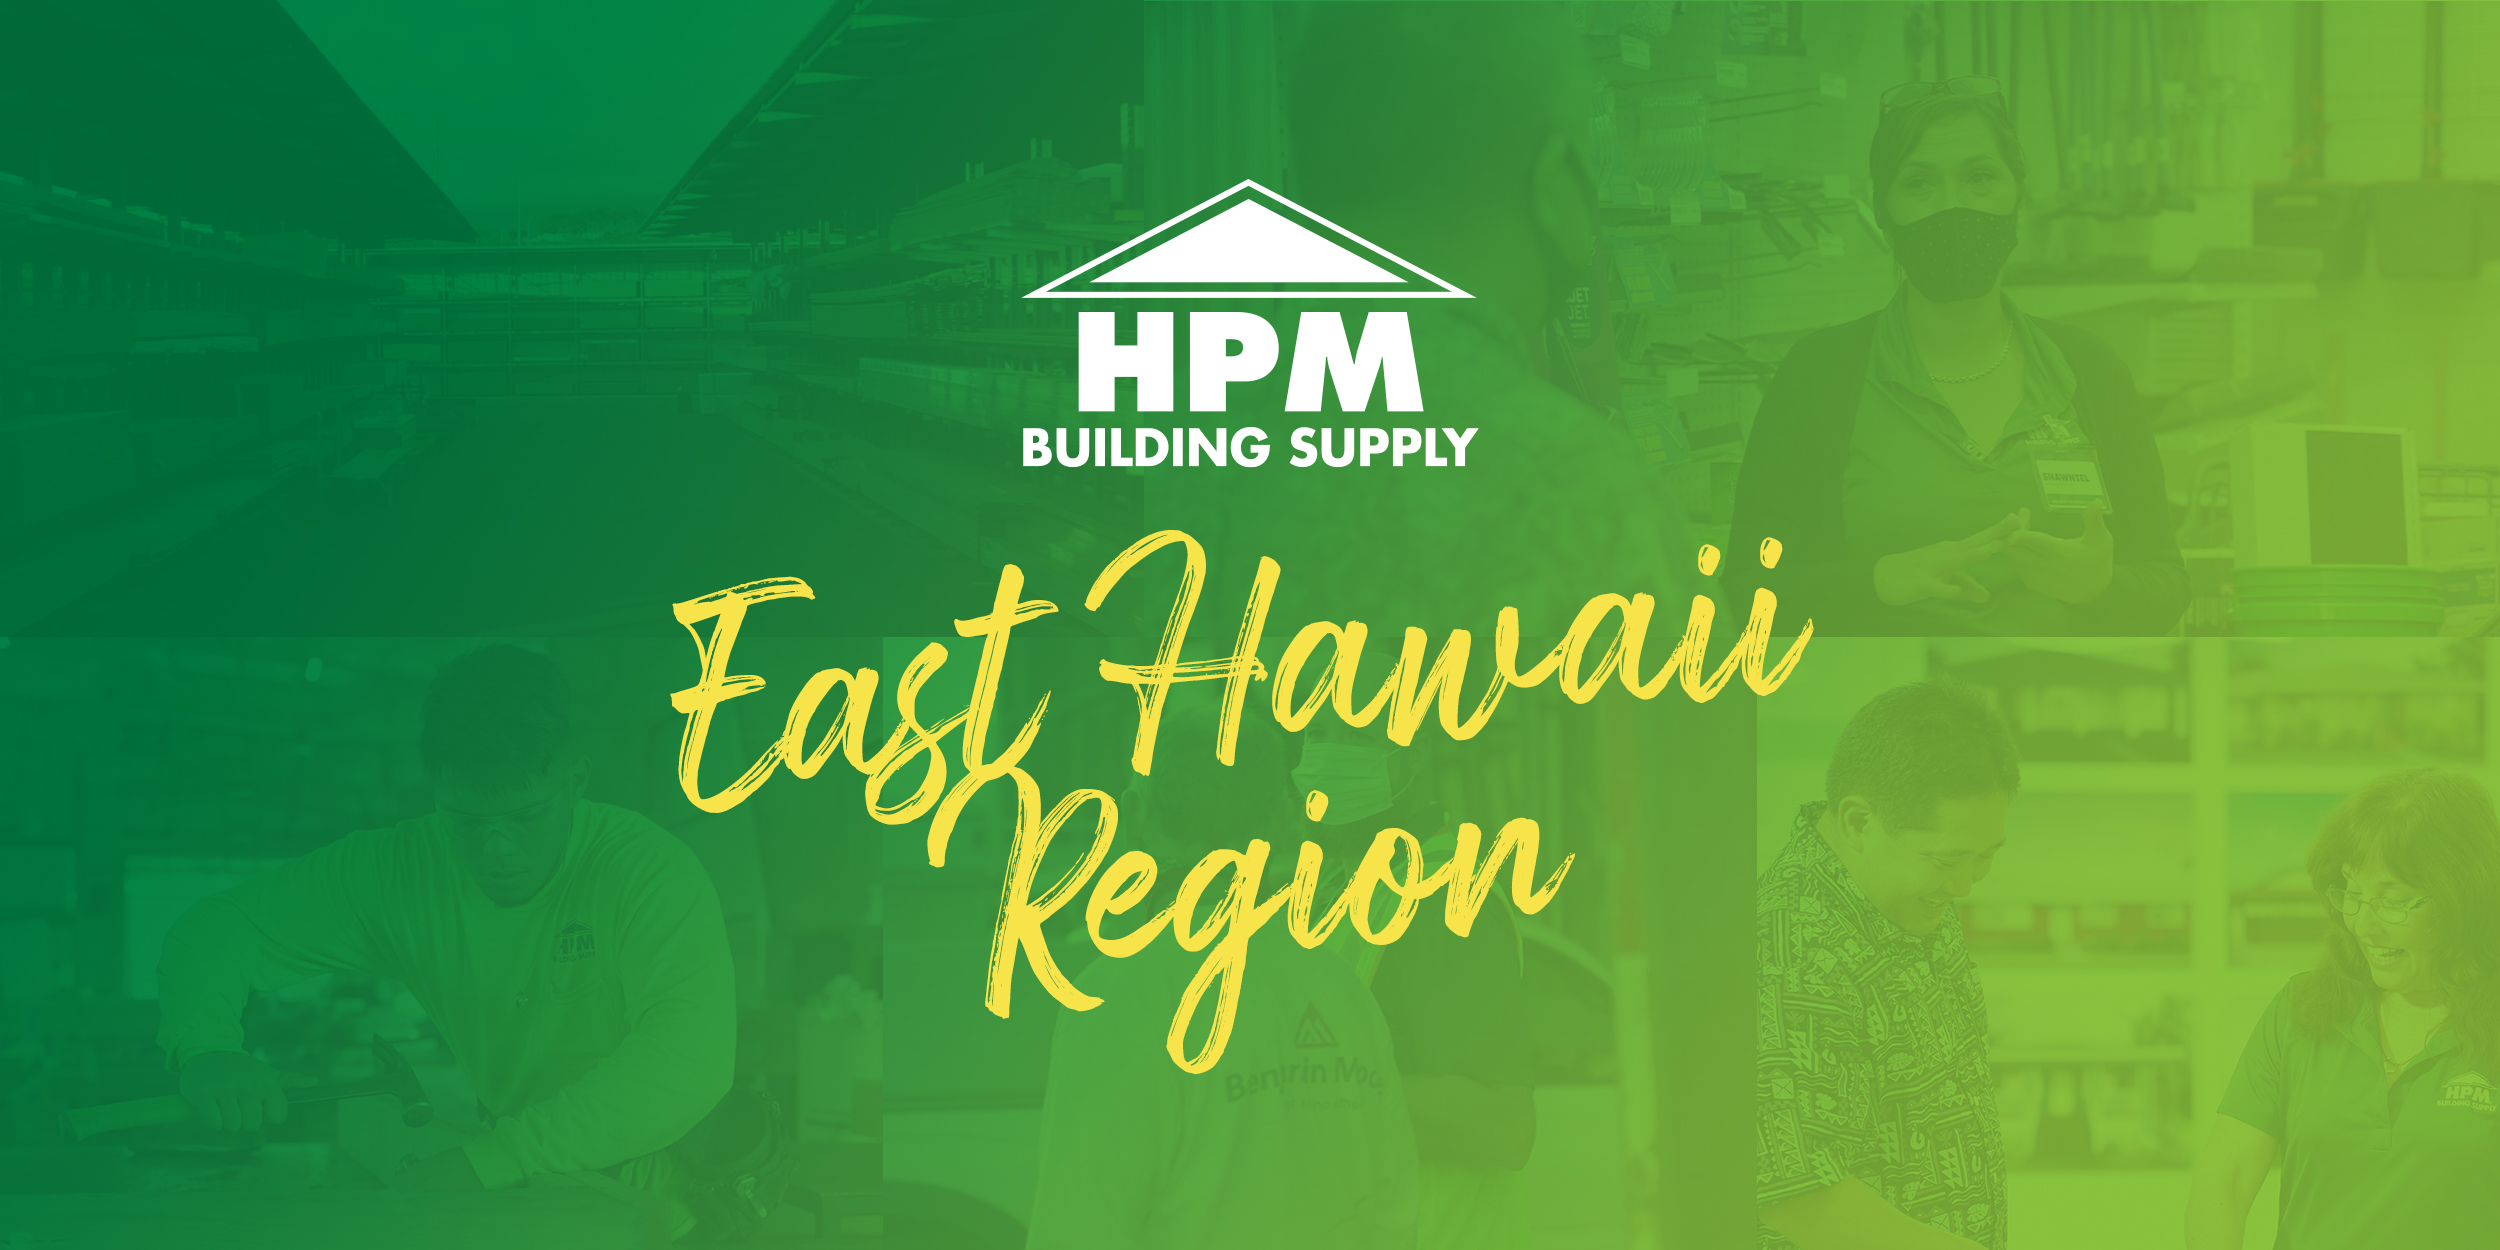 HPM Building Supply: East Hawaii Region